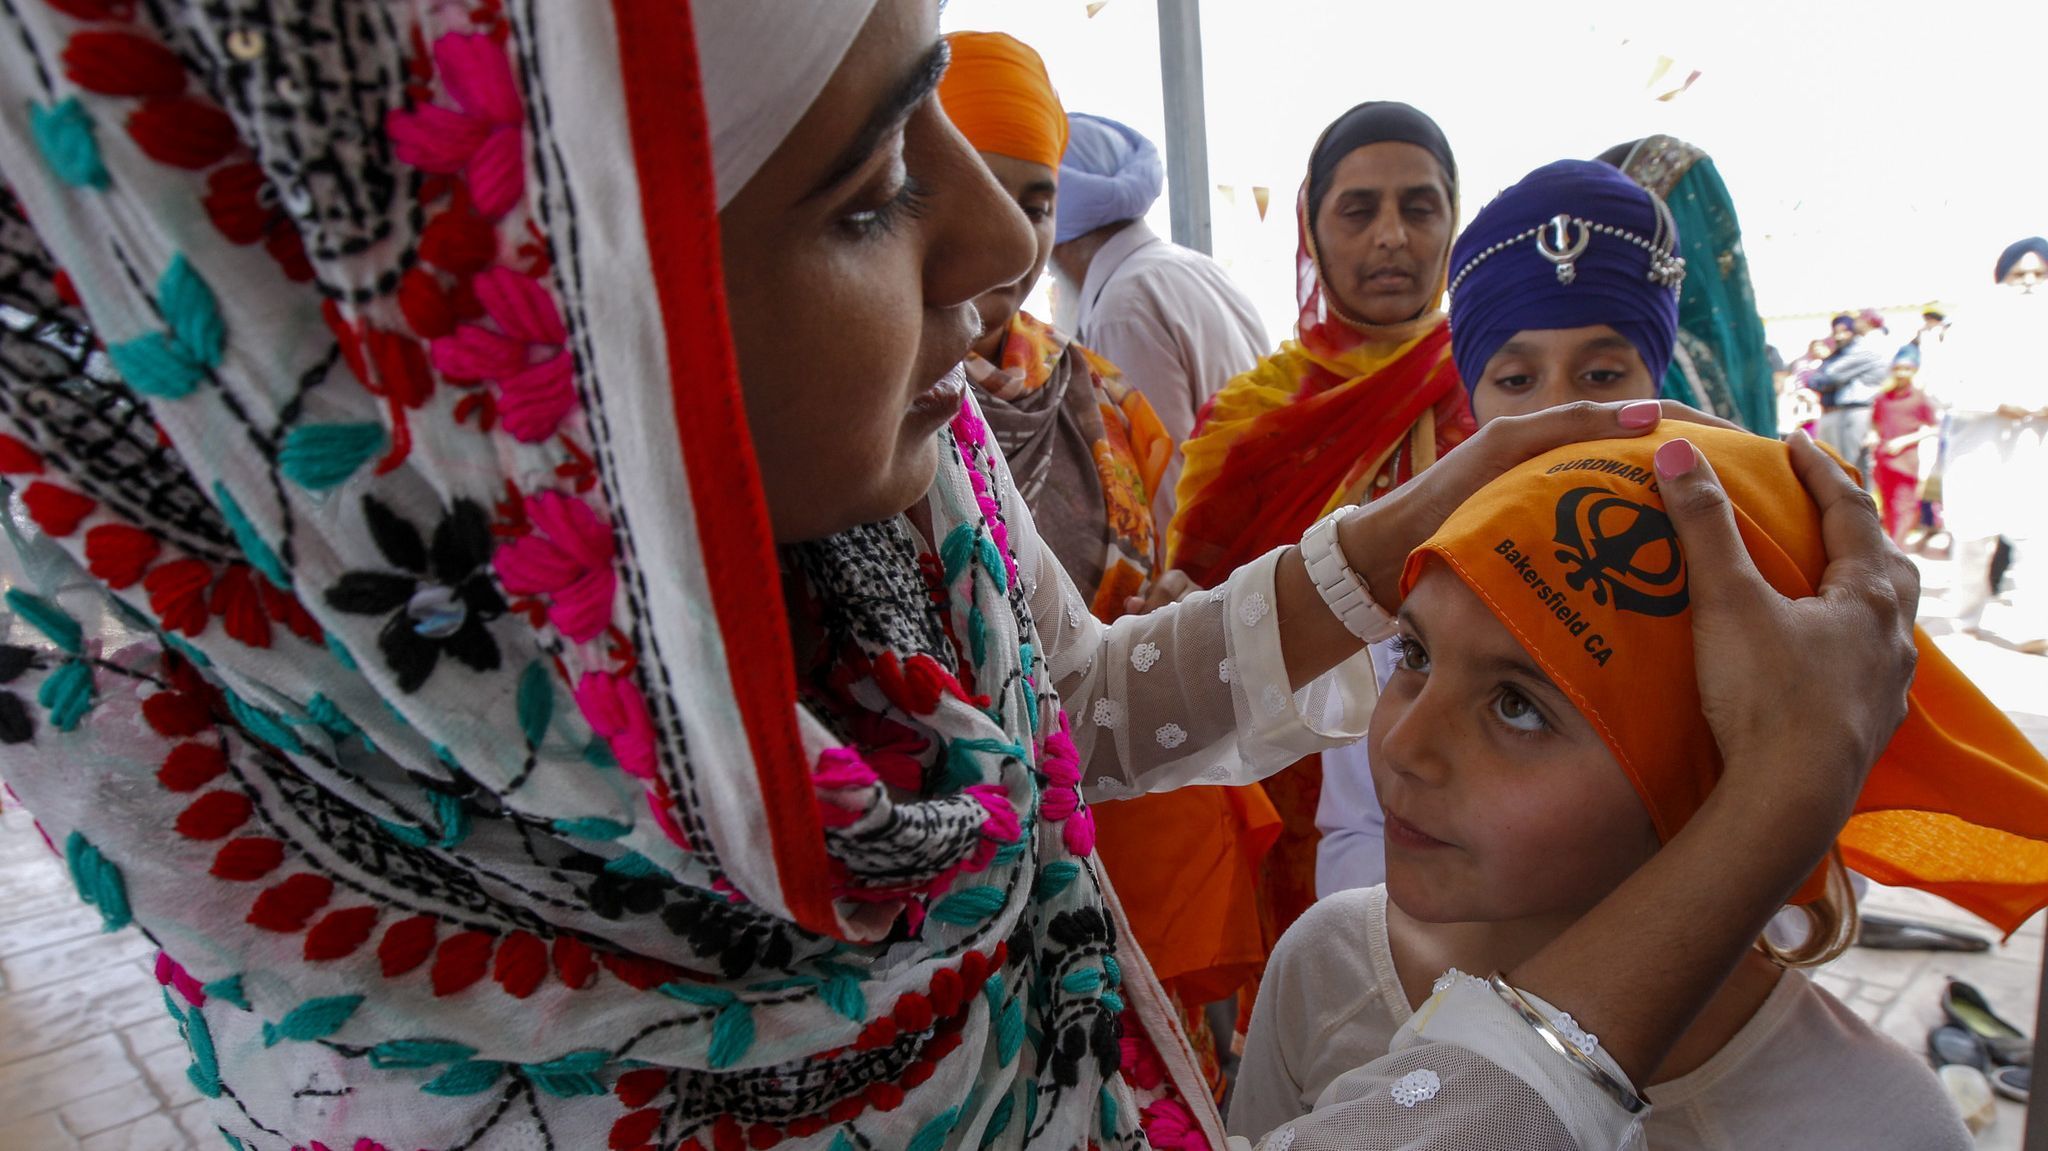 Sukhpreet "Sandy" Kaur, left, helps Emily Villarreal cover her head before entering the gurdwara.